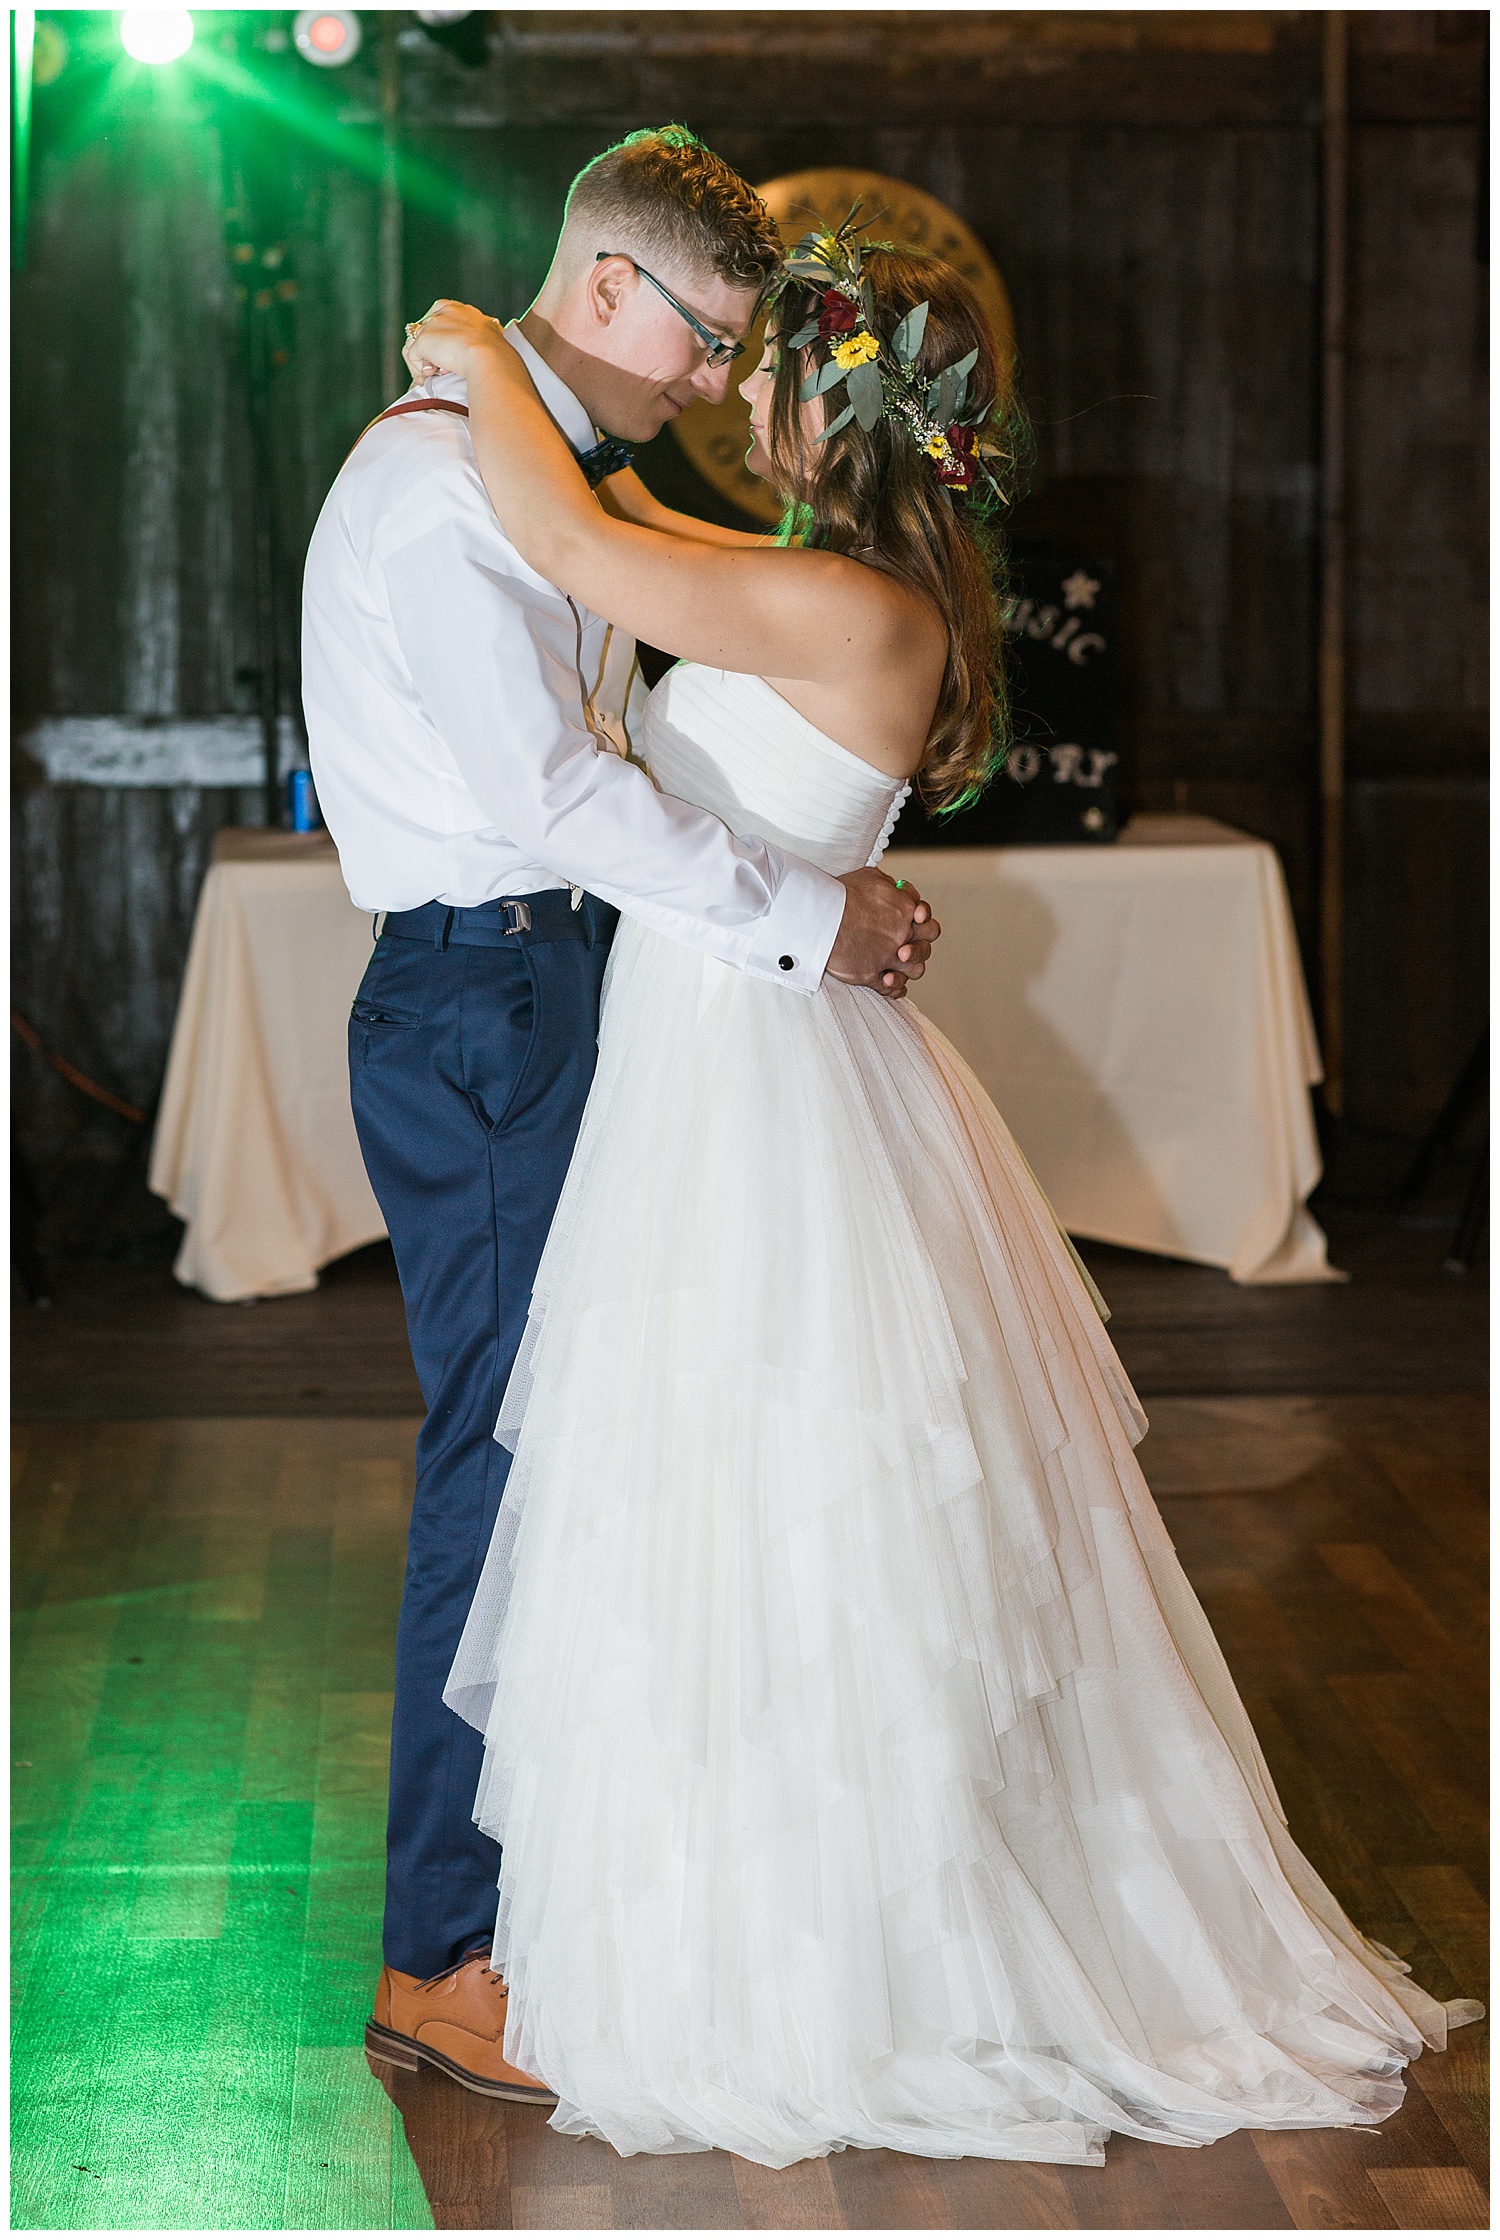 Julia and Brian - Lass and Beau-1173_Buffalo wedding photography.jpg